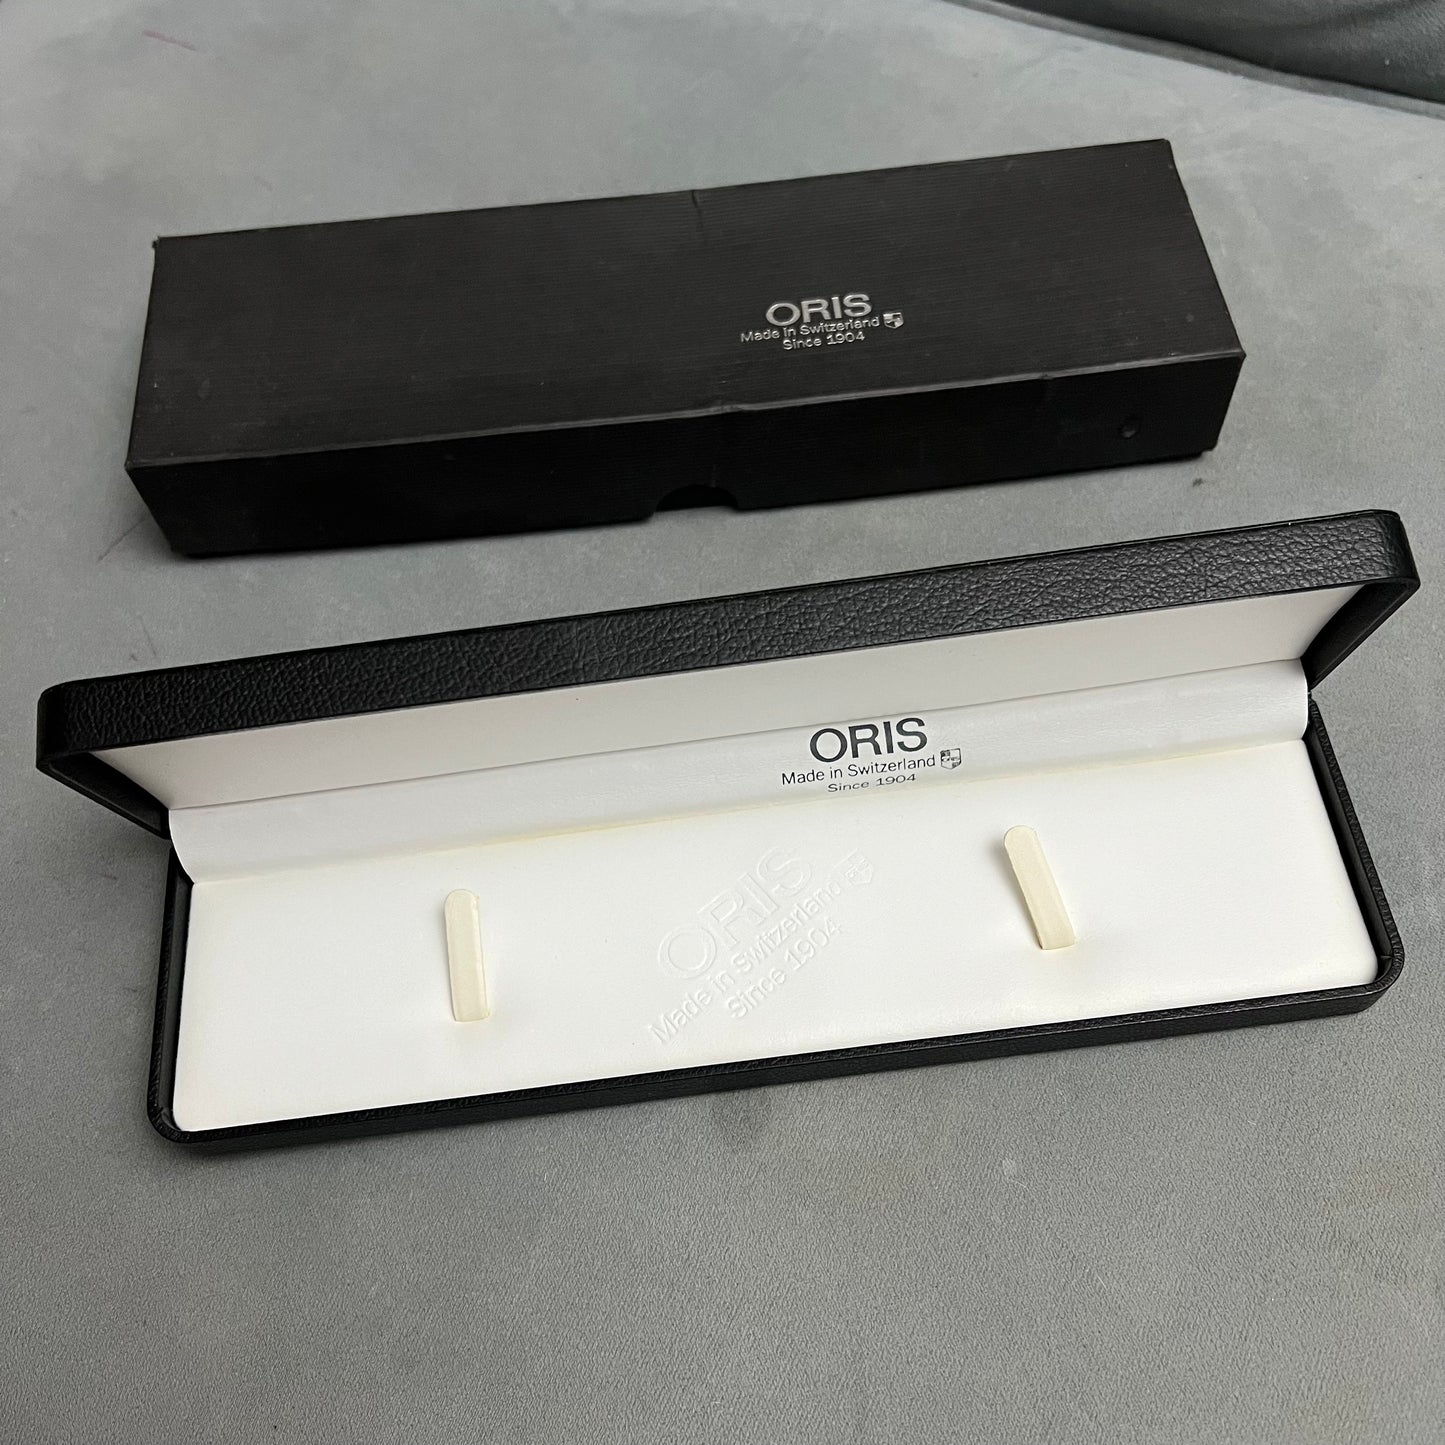 ORIS Black Box + Outer Box 10.75x3.10x1.30 inches